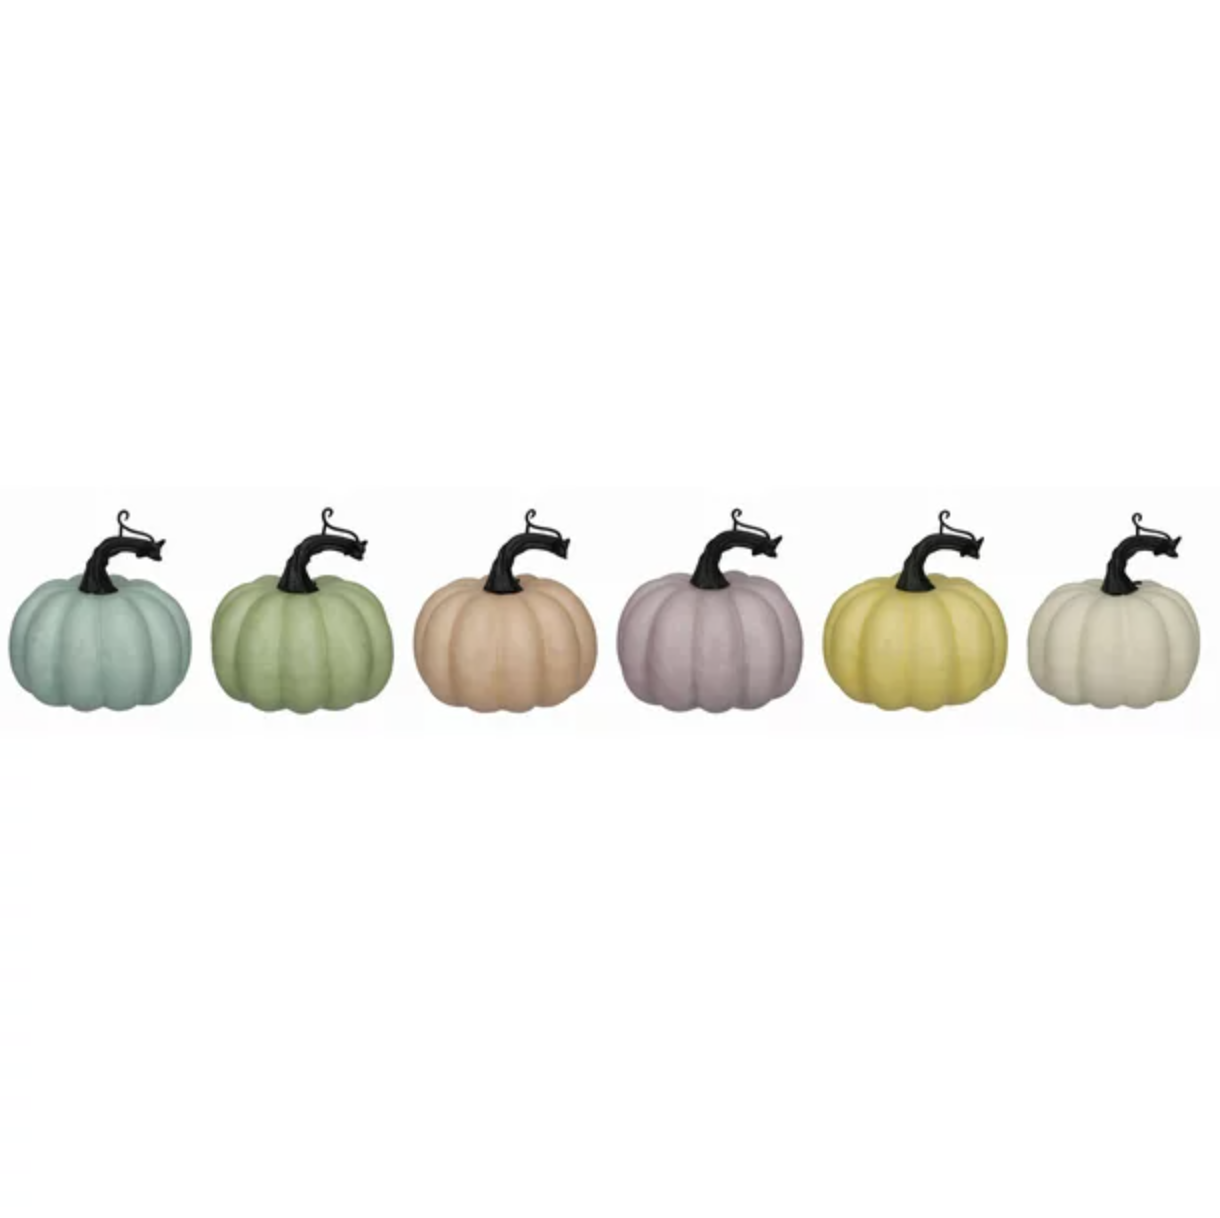 3-inch decorative pumpkins in pastel colors